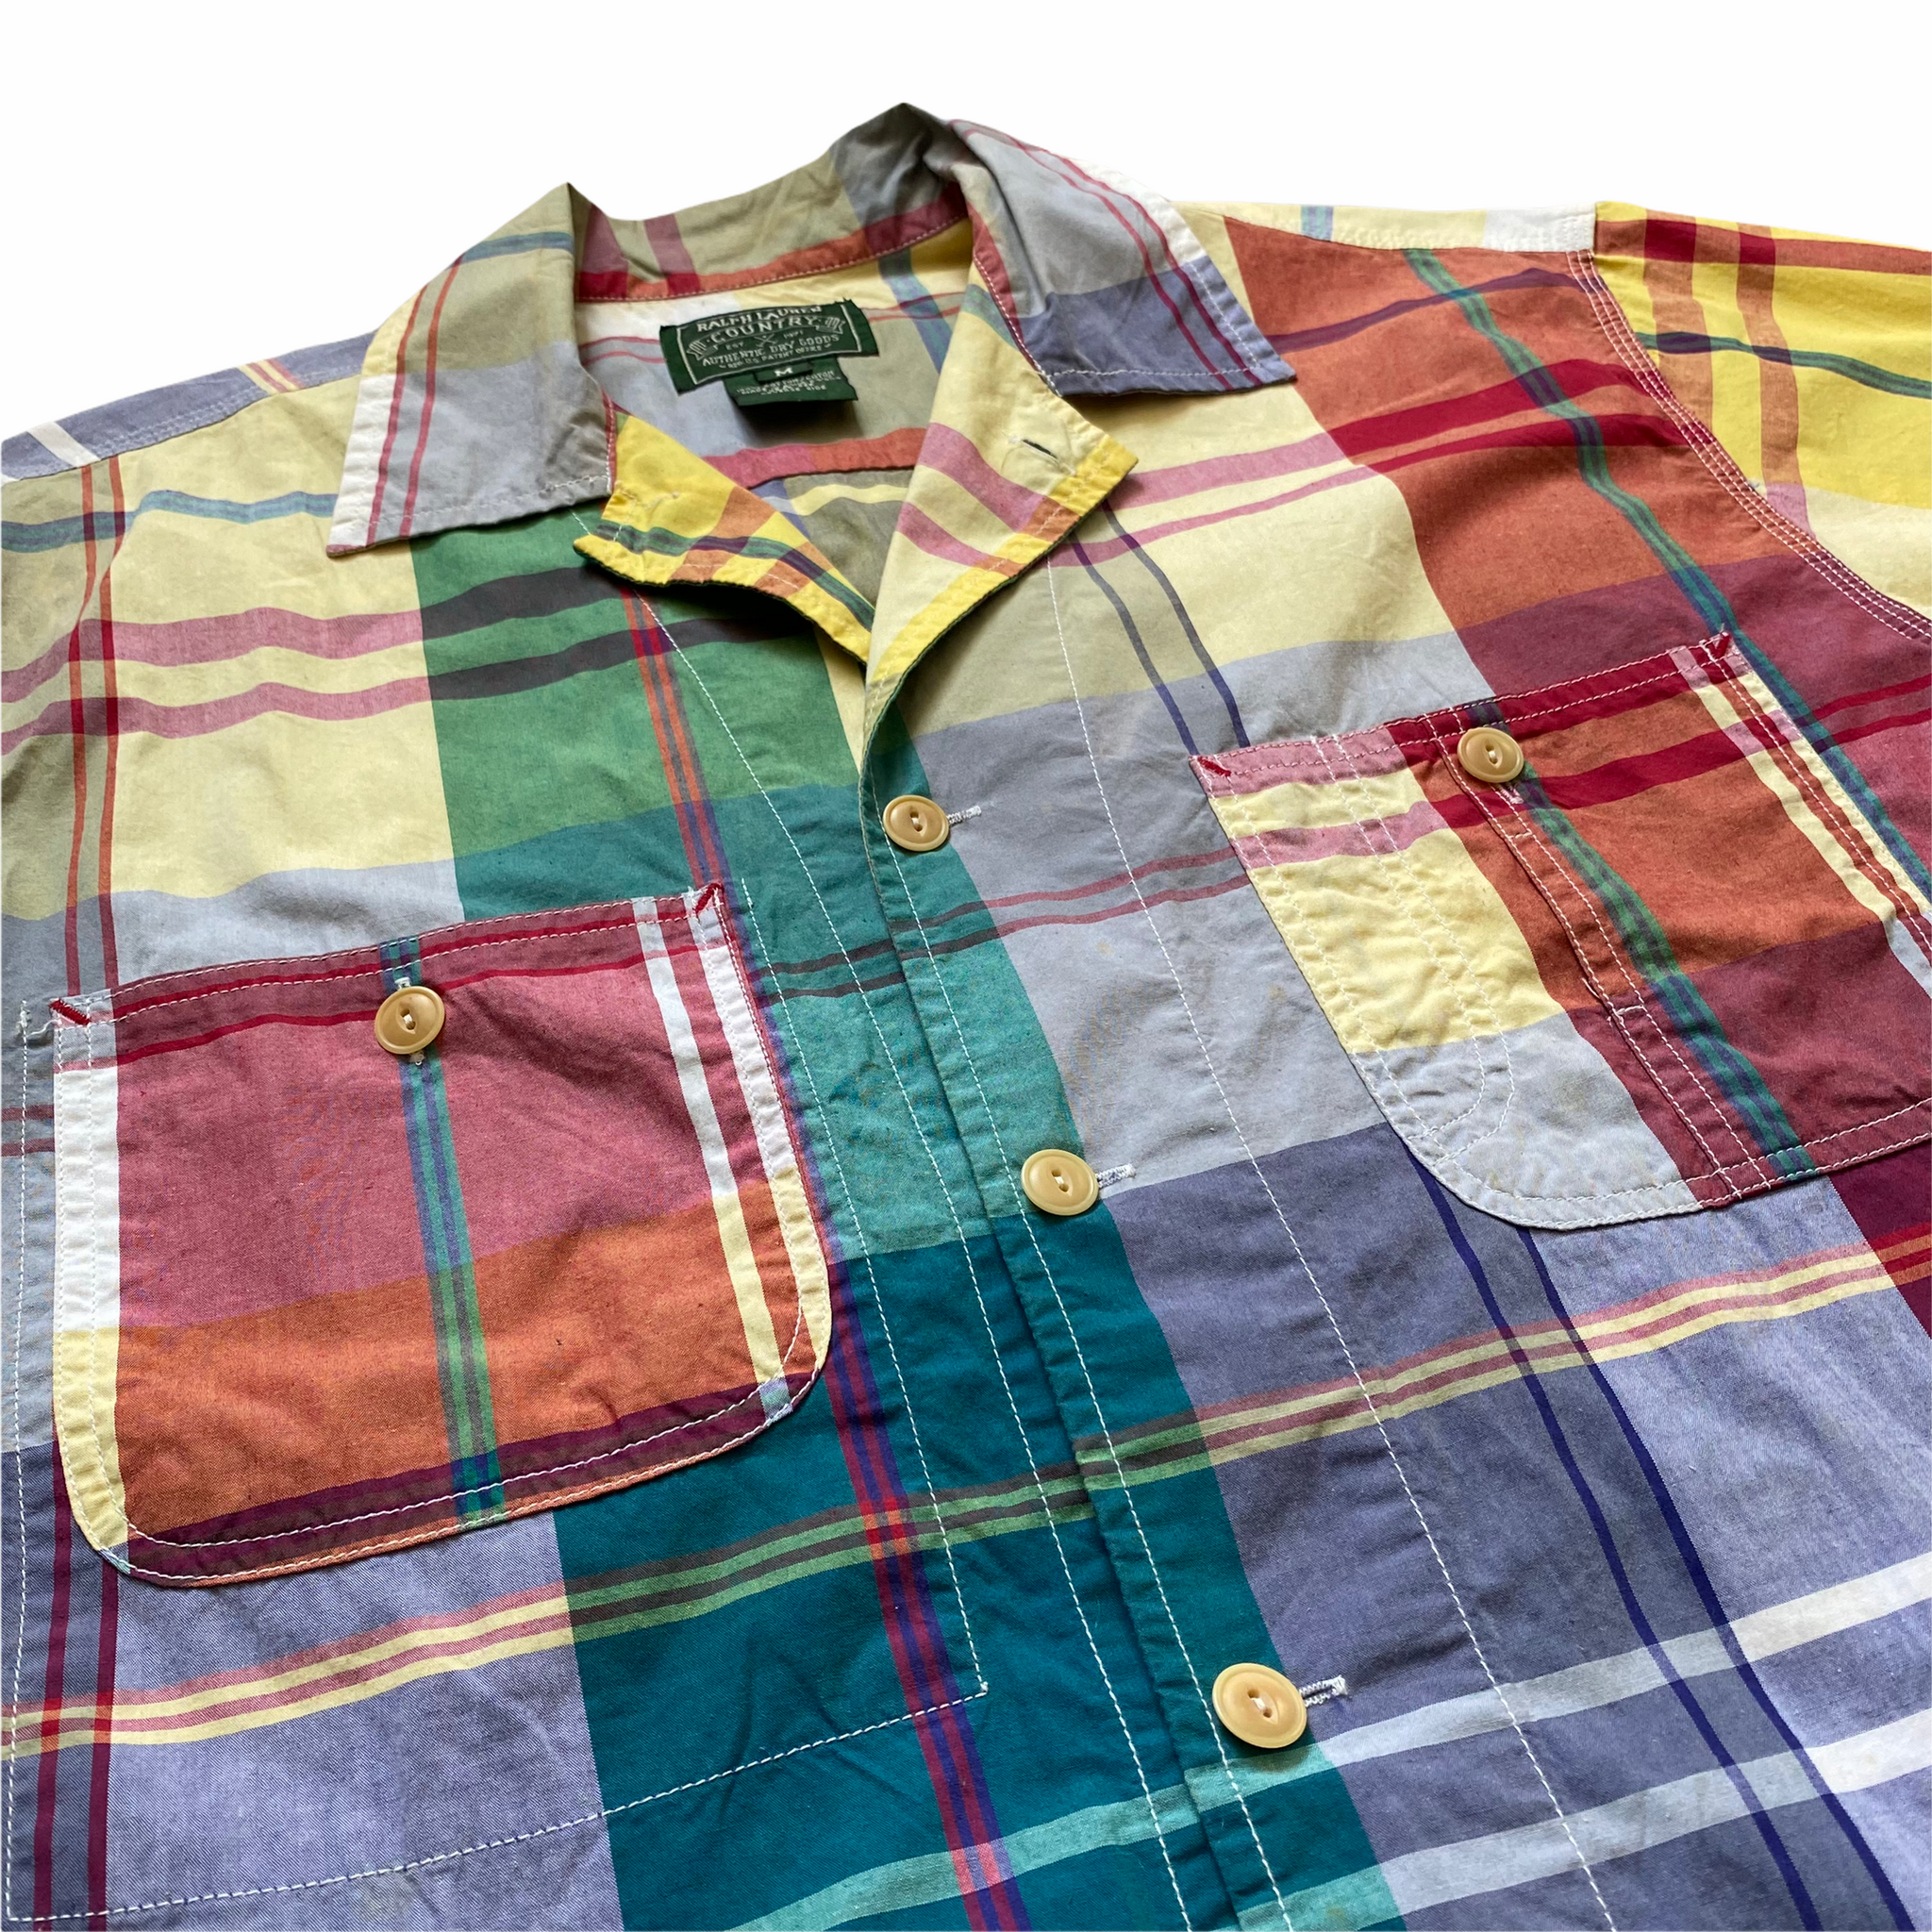 90s Polo ralph lauren country plaid camp shirt.  Medium fit